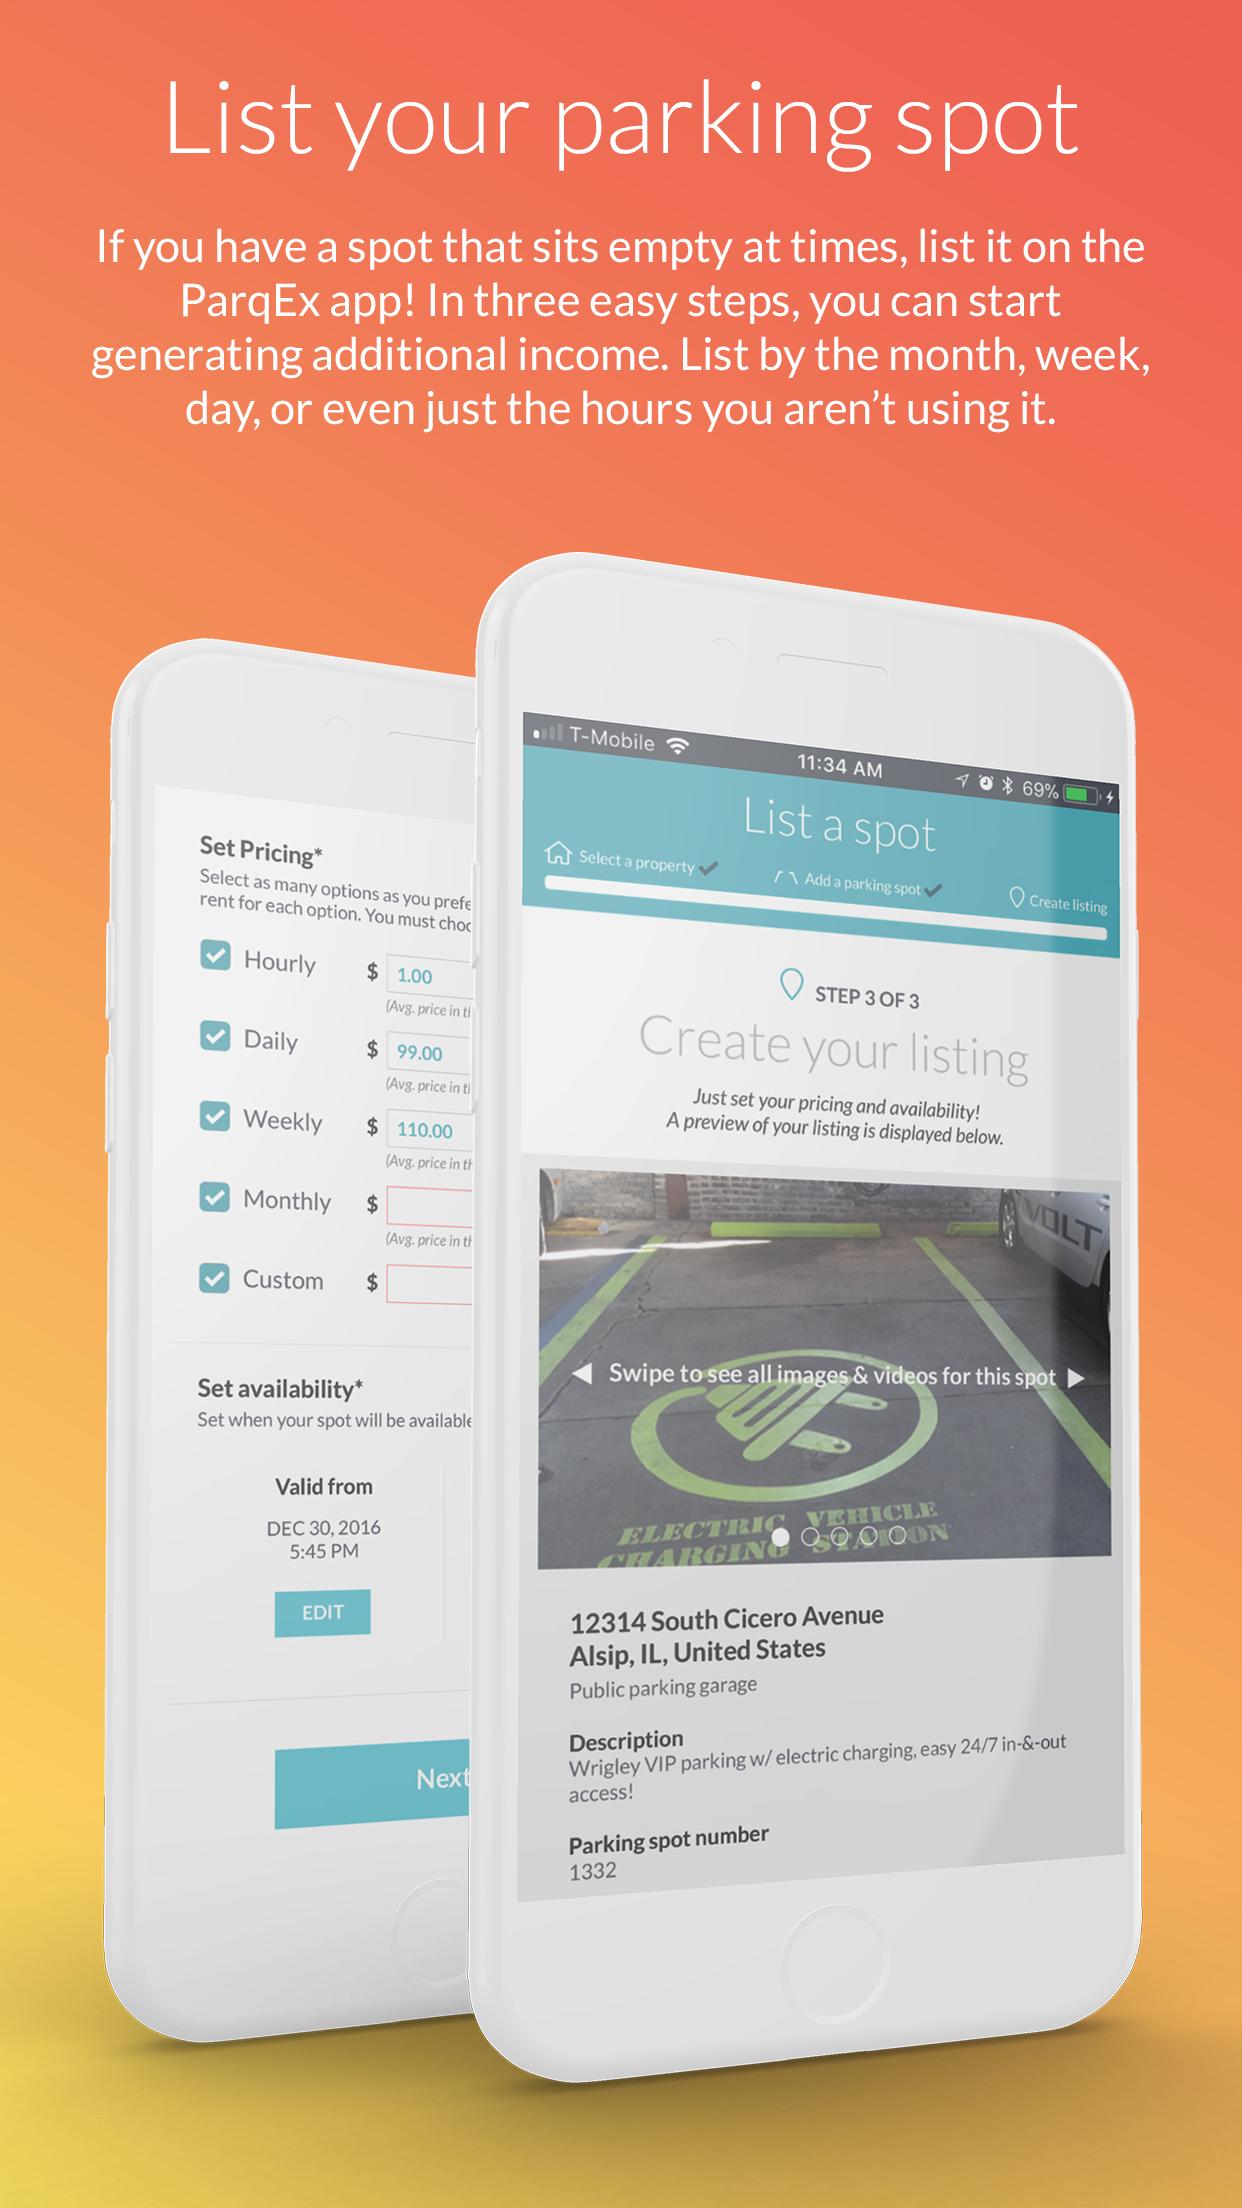 ParqEx - The Smart Parking Platform